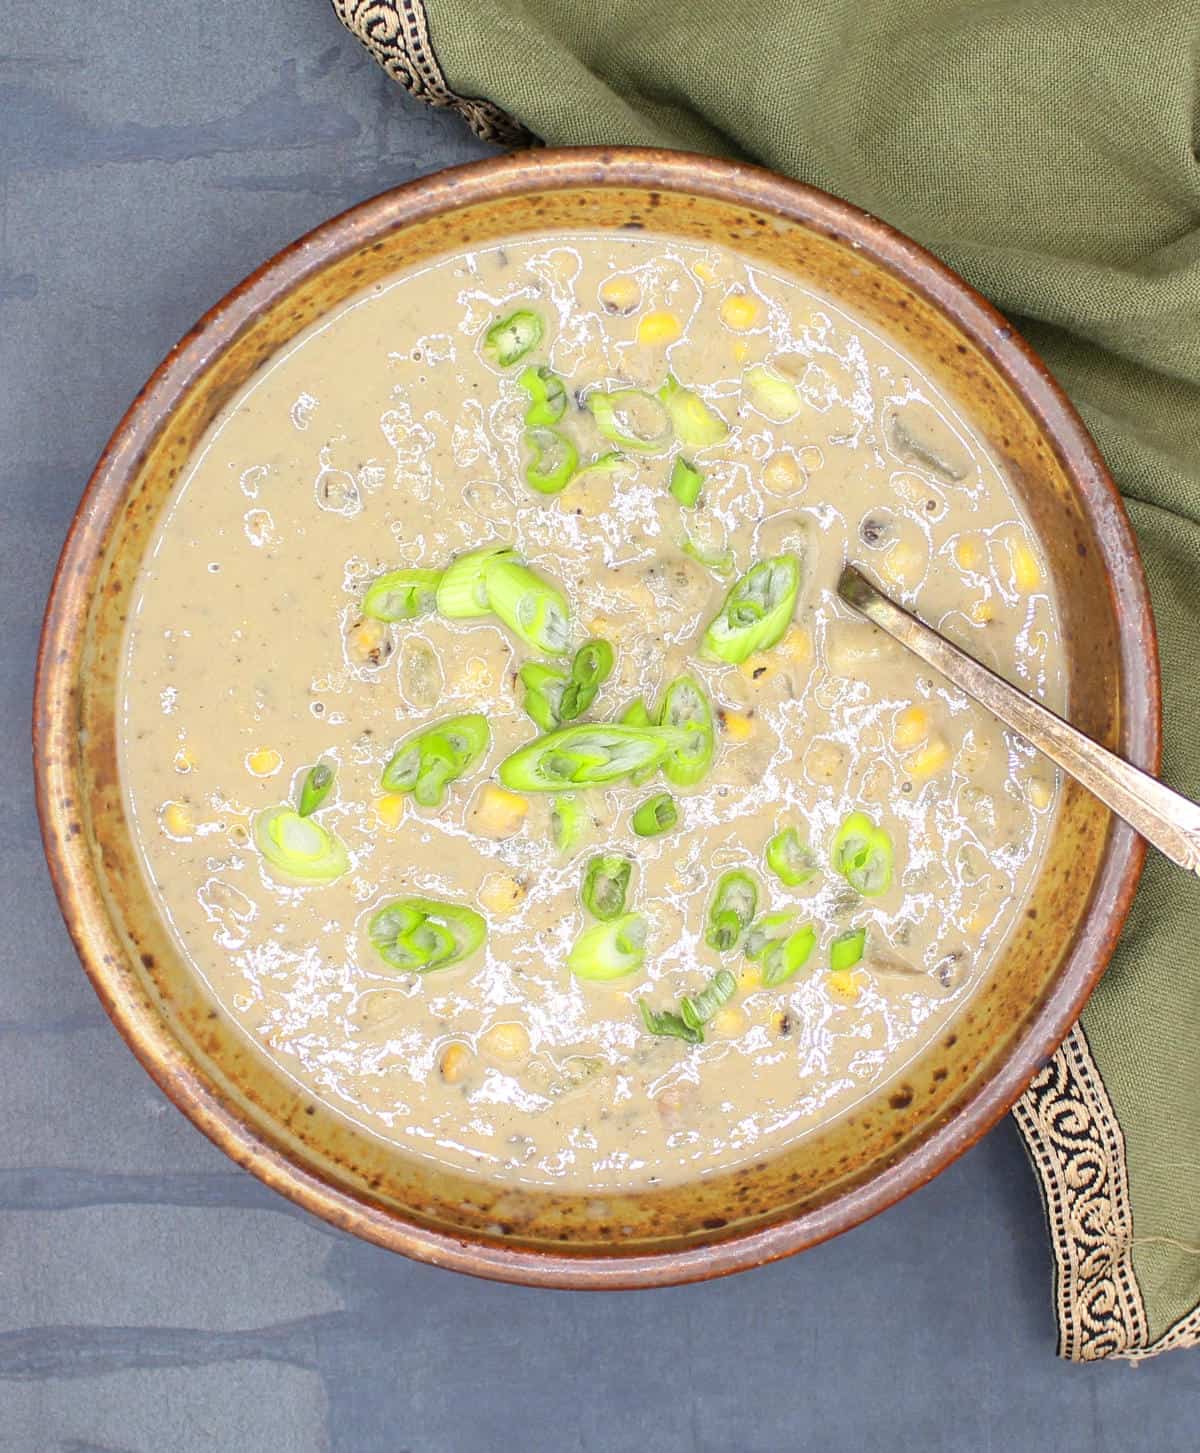 Creamy vegan corn chowder in bowl with scallions.